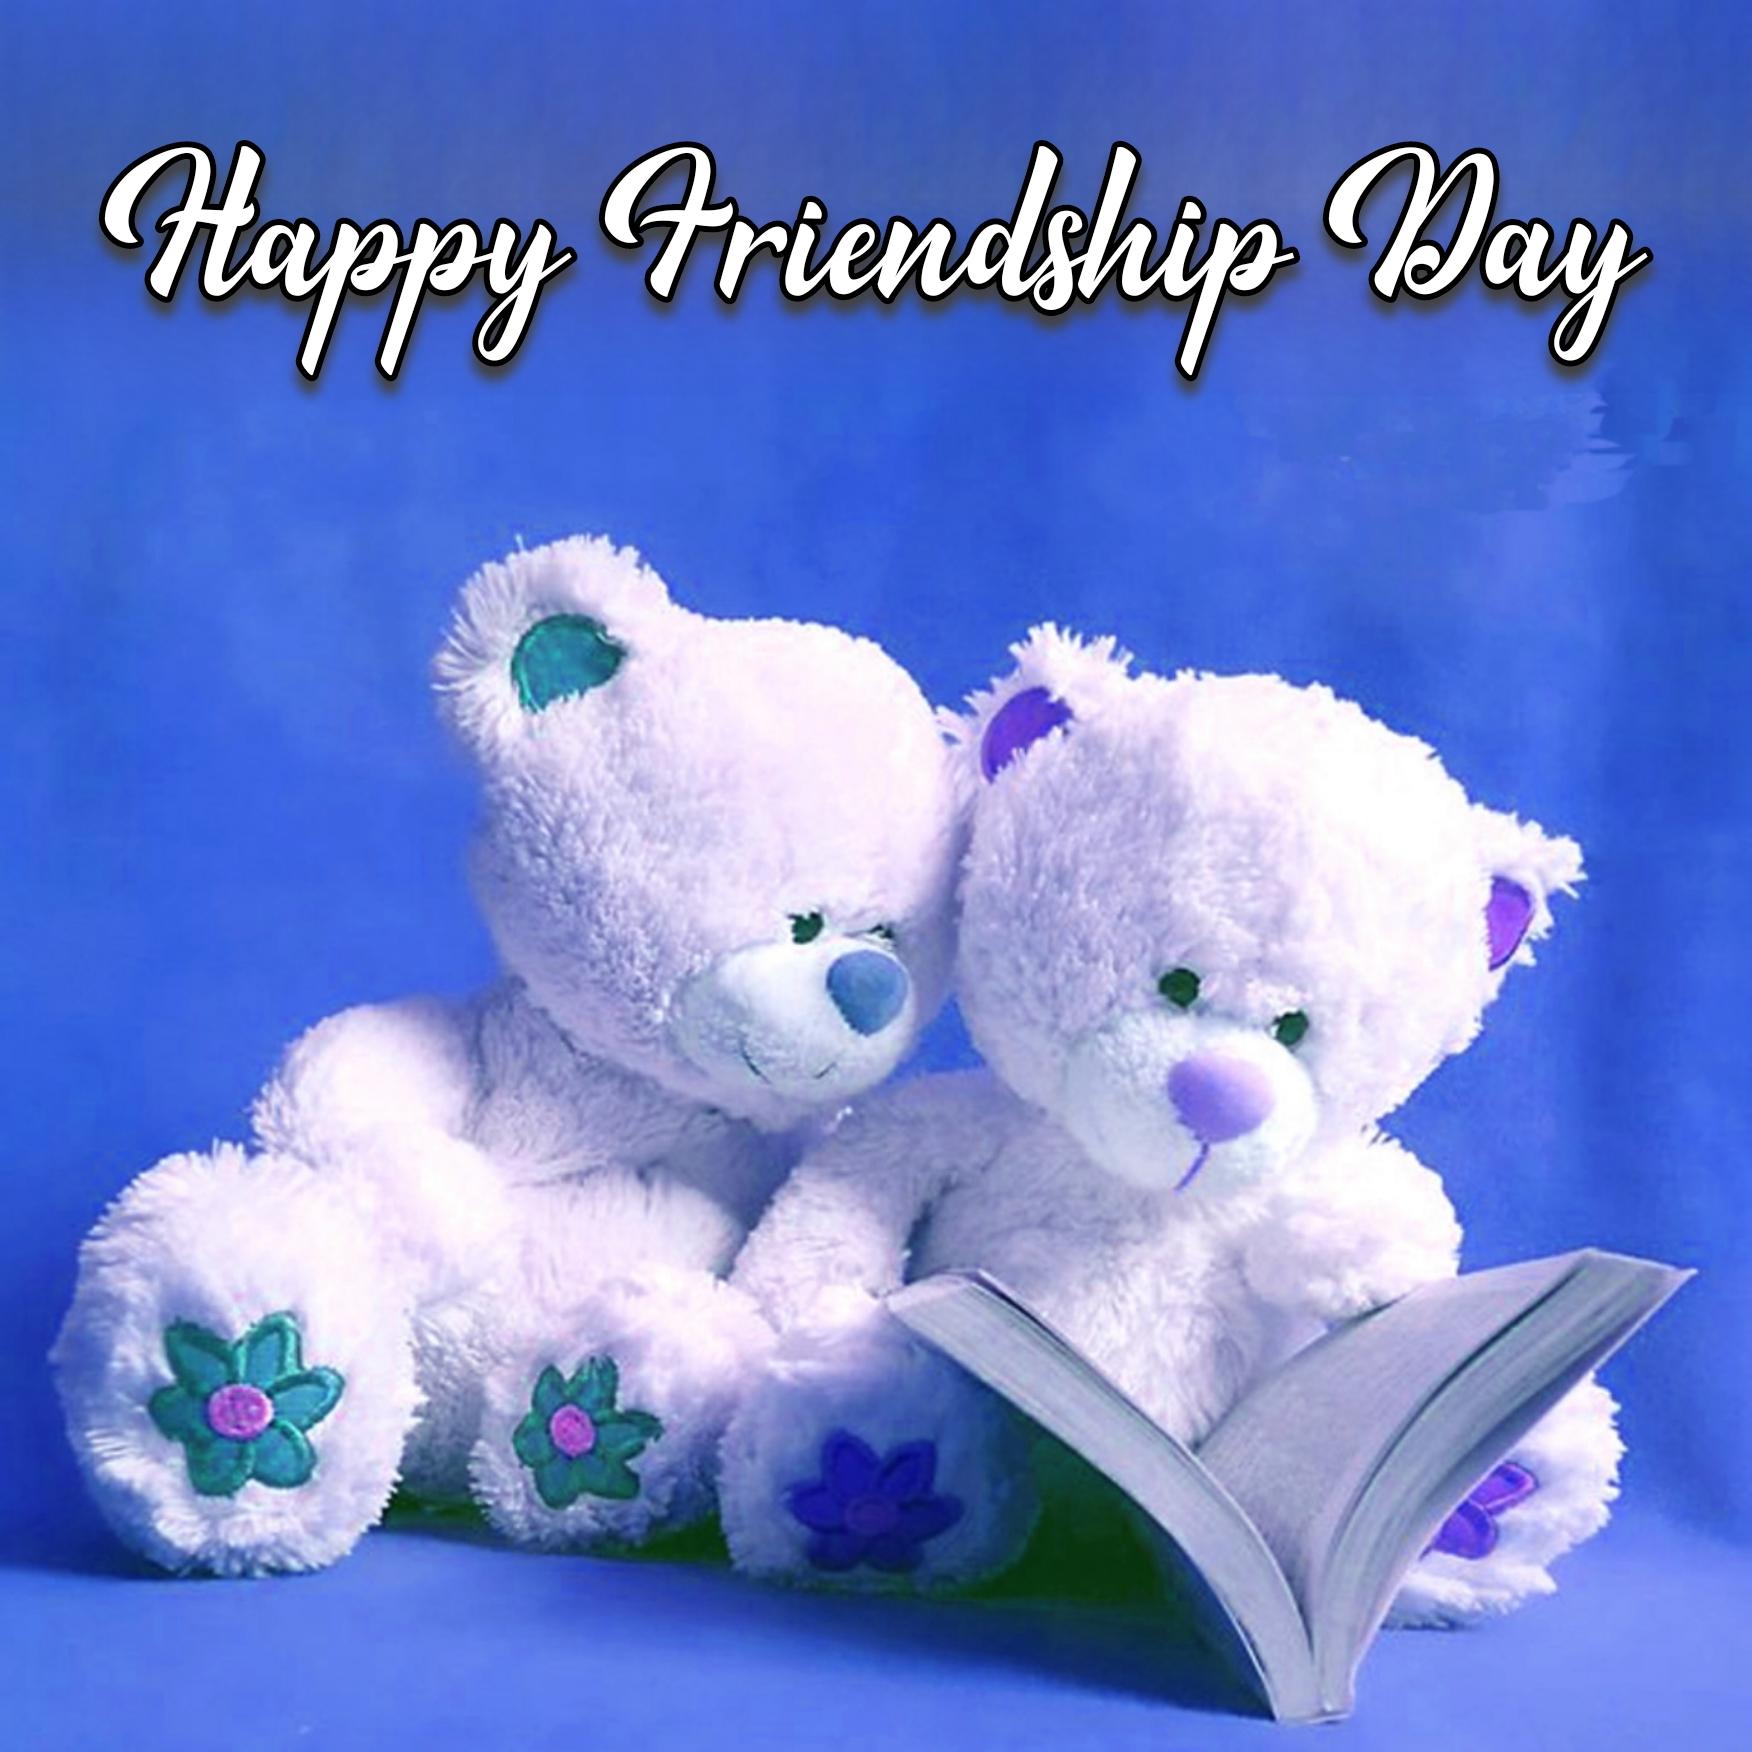 Happy Friendship Day Teddy Bear Image